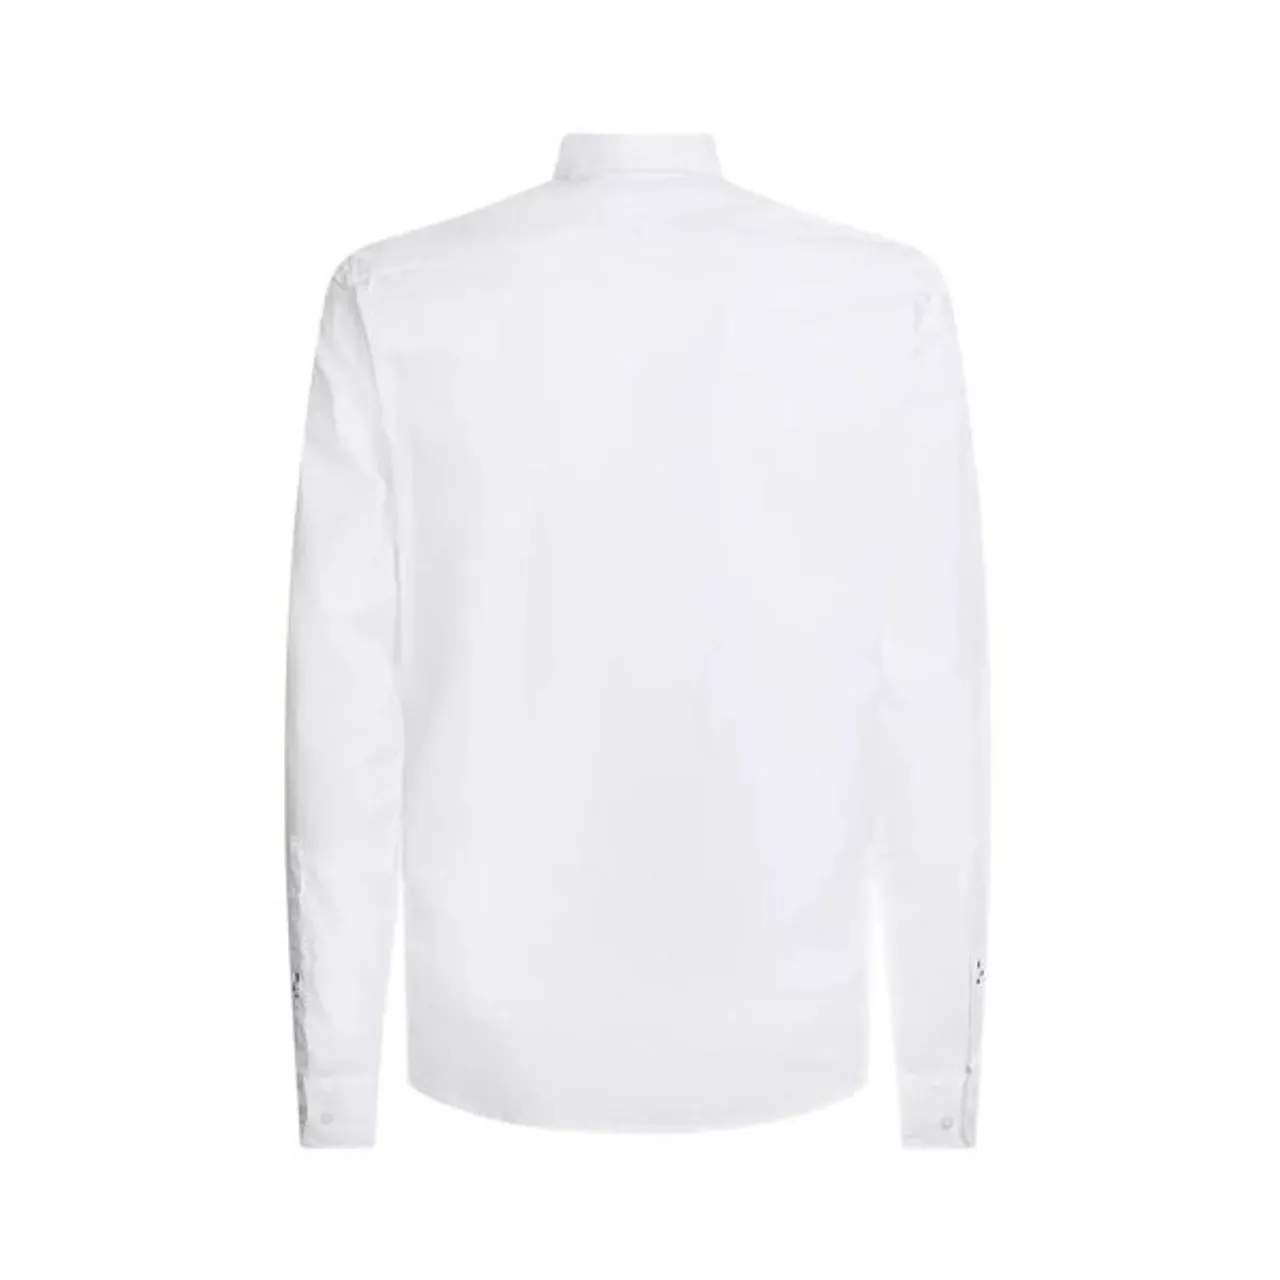 Tommy Hilfiger 1985 Oxford Shirt - White - Male